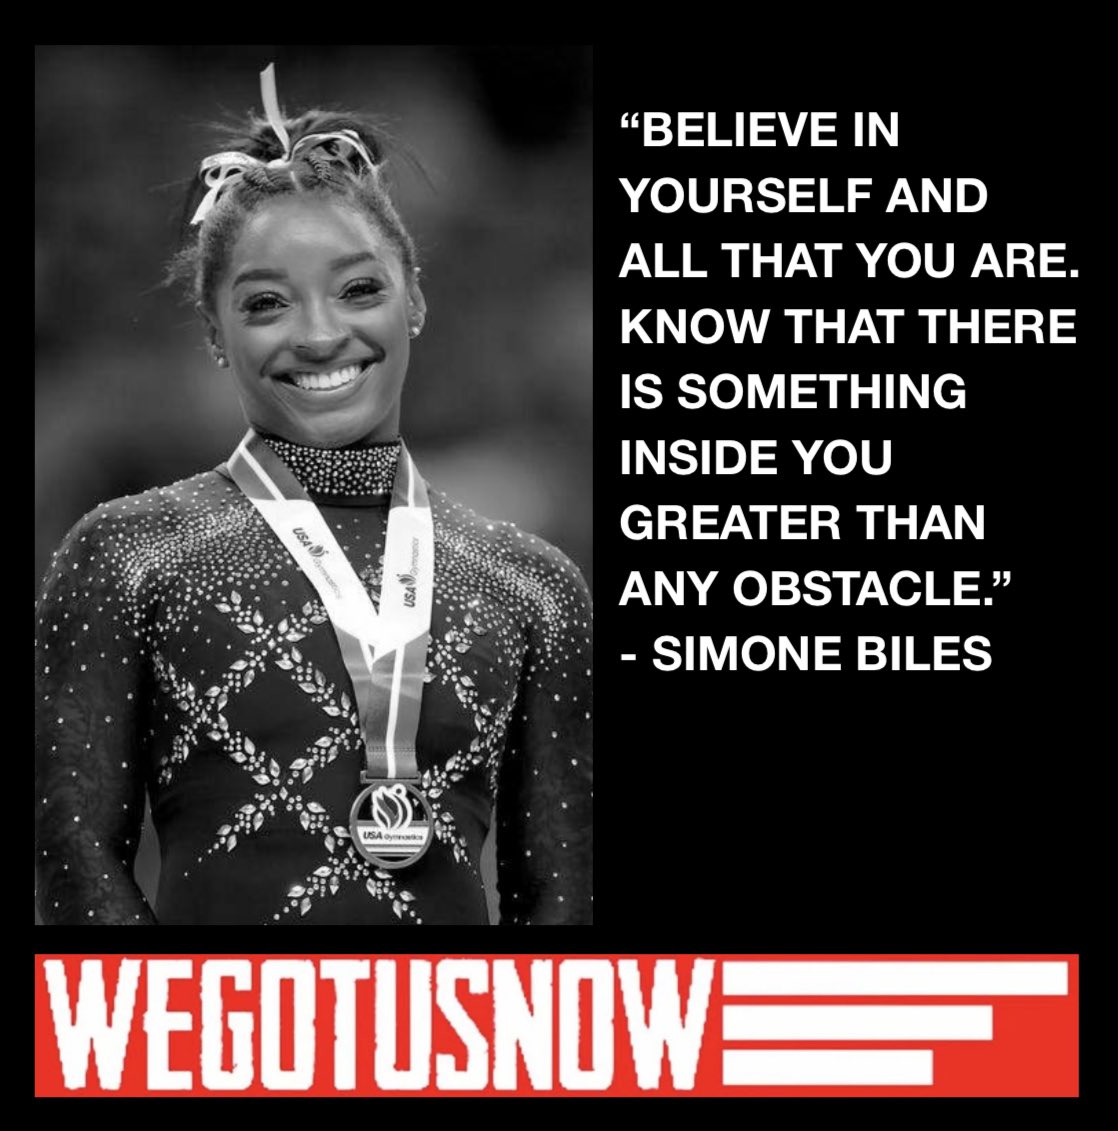 Wise words from the world-renowned gymnast, Simone Biles. #WEGOTUSNOW